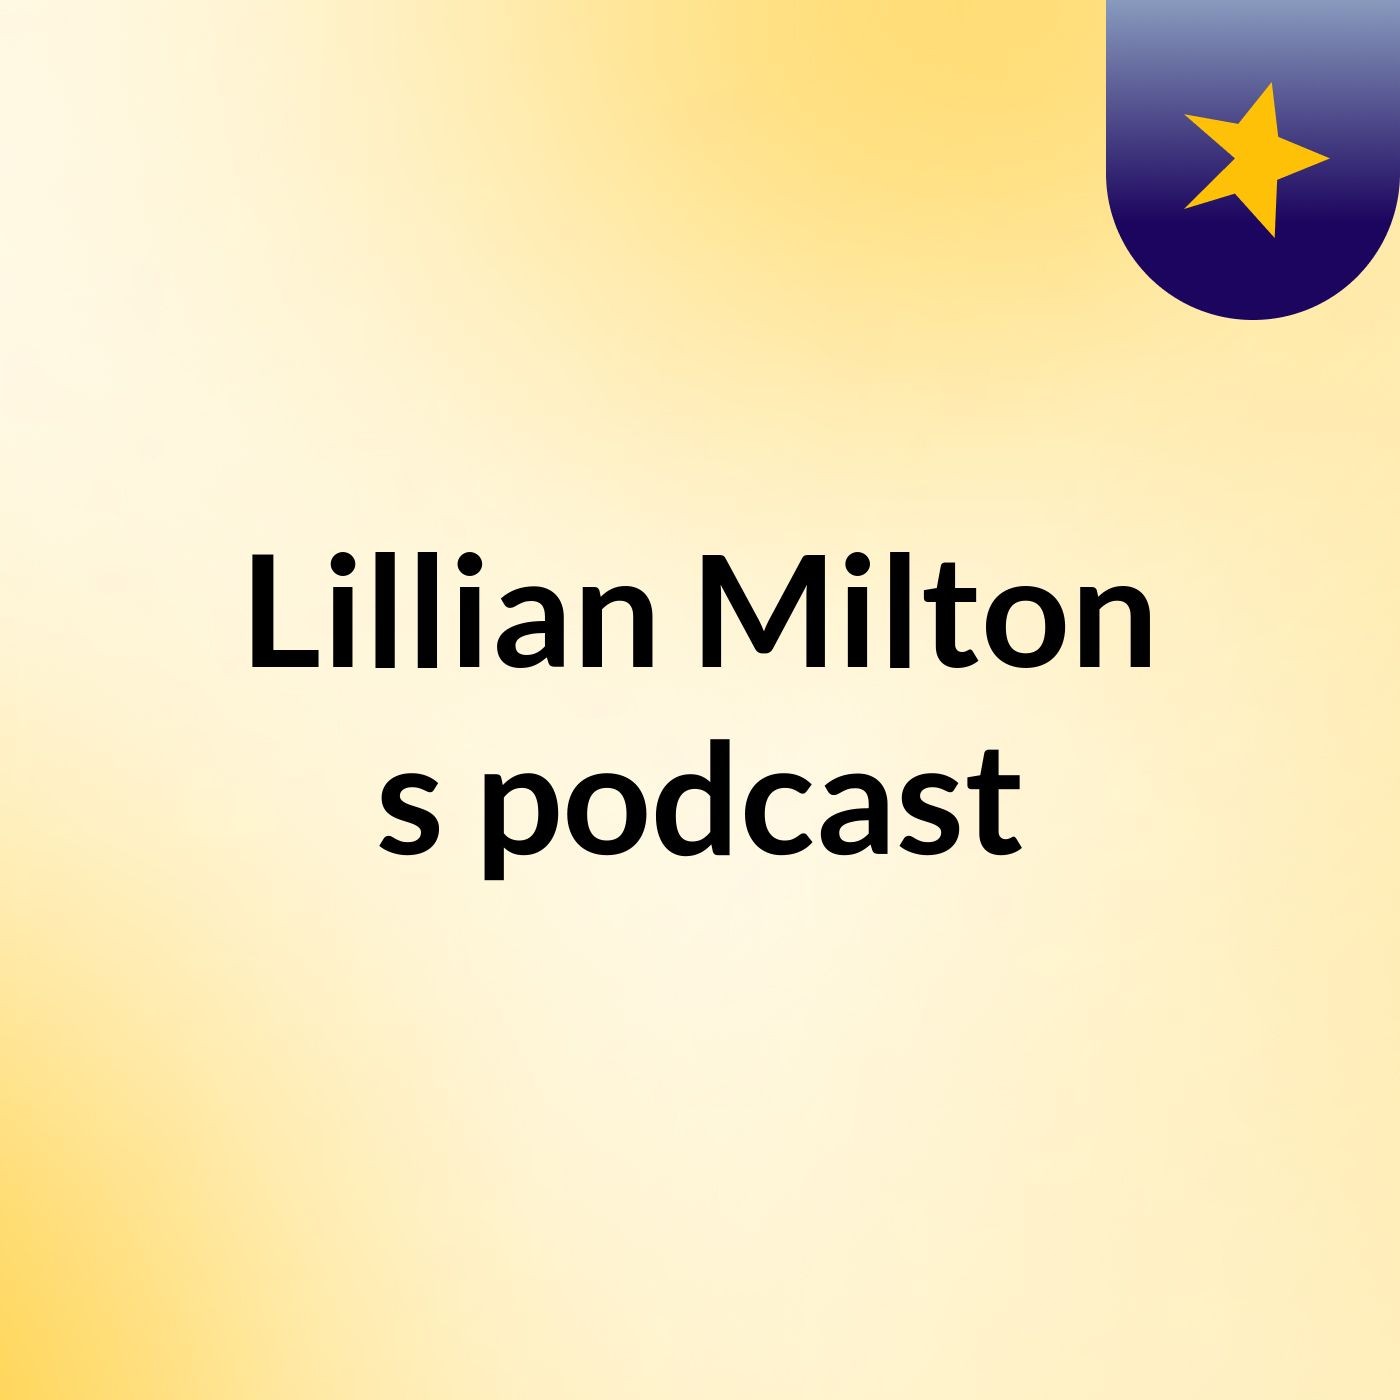 Lillian Milton's podcast